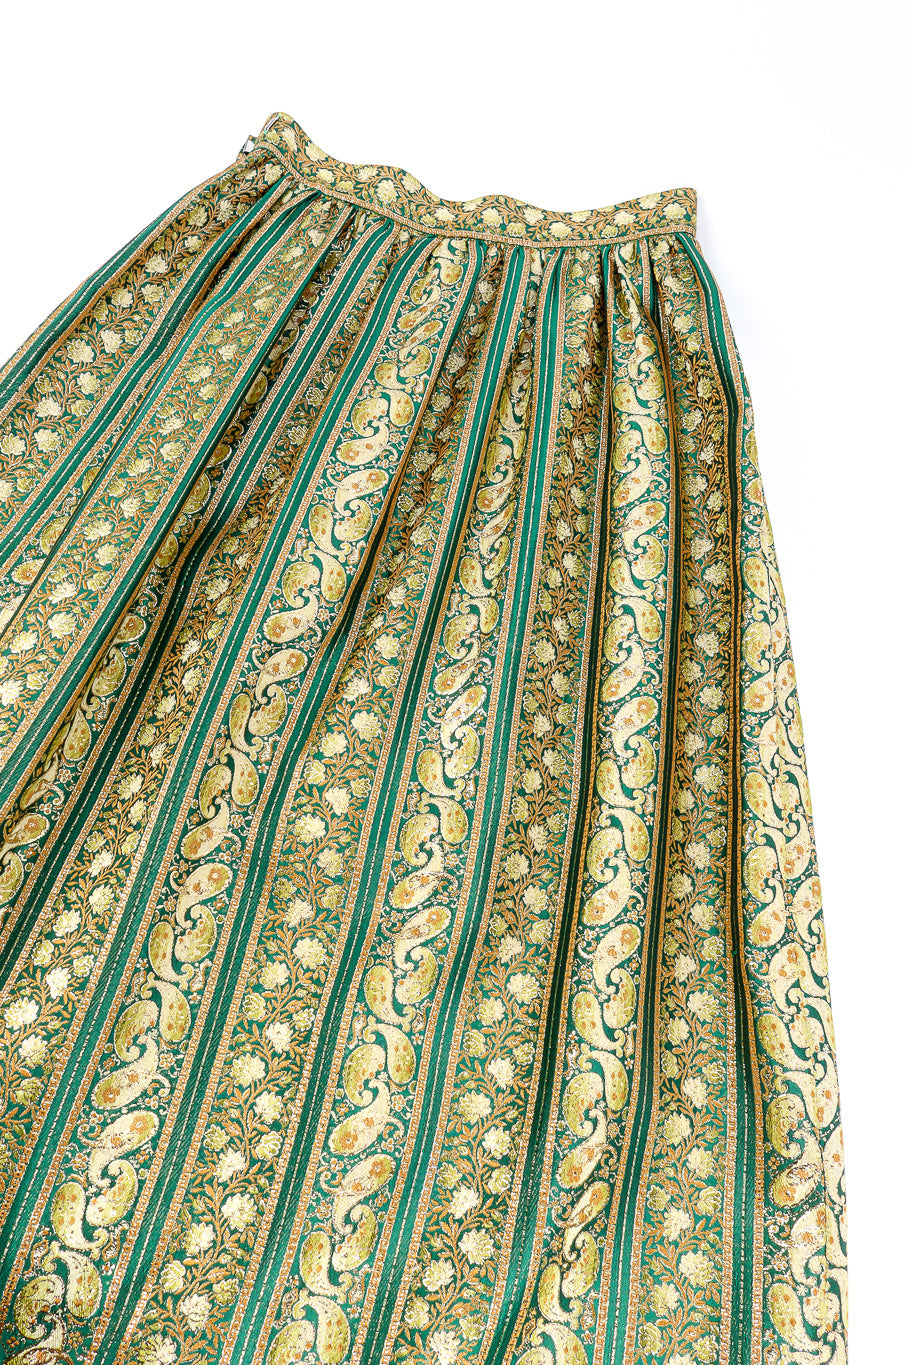 Vintage metallic skirt flat lay @recessla